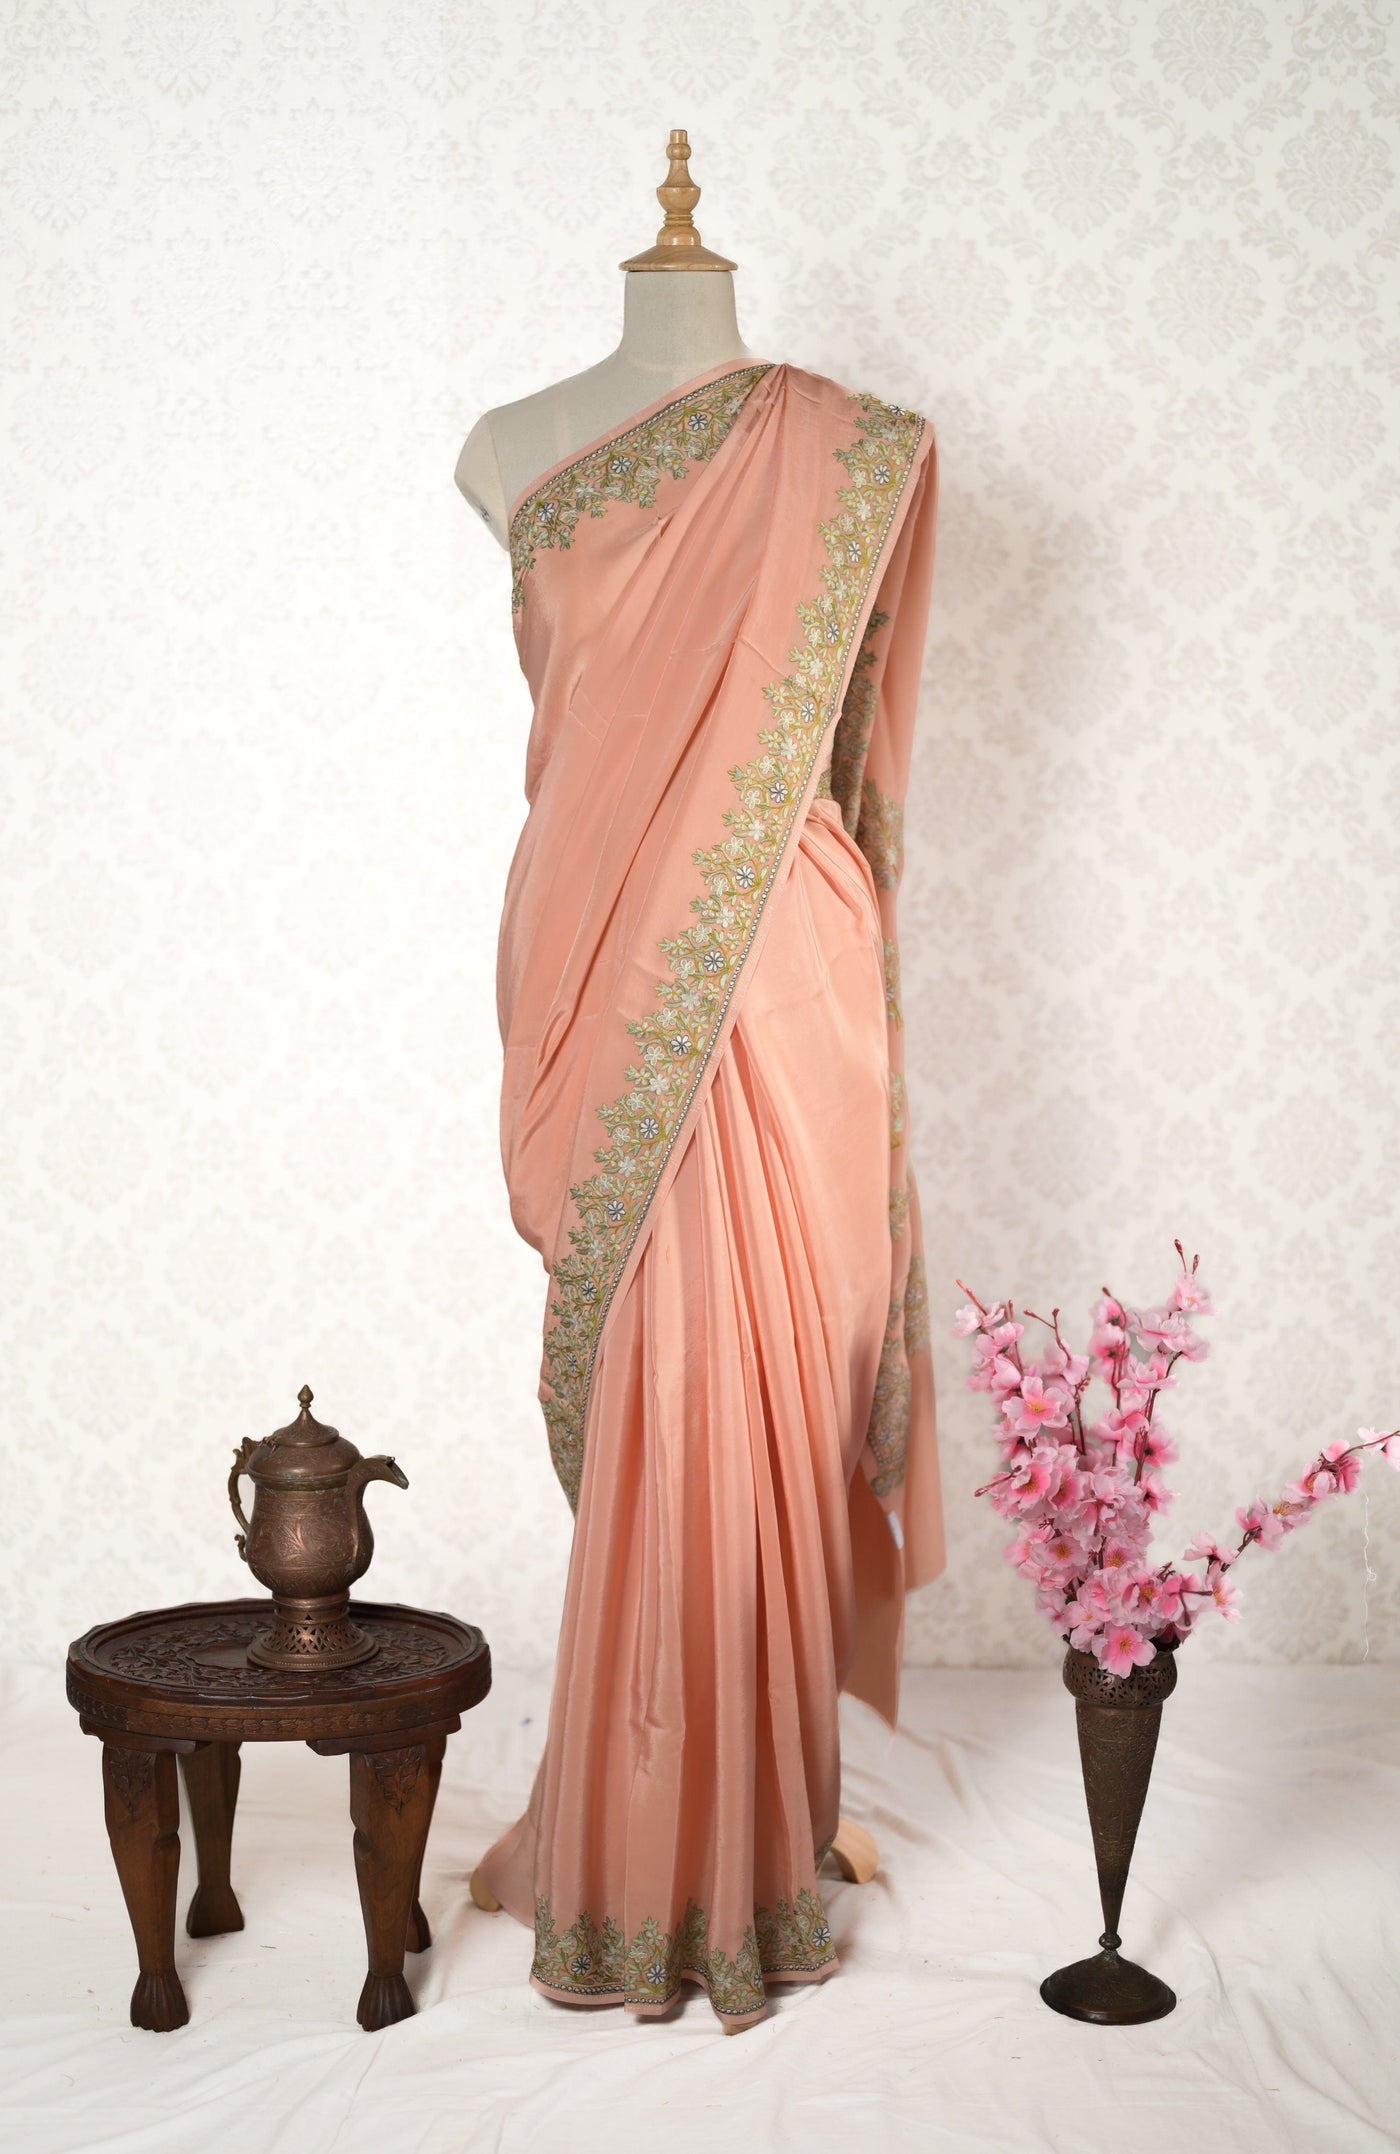 Woolen Saree Blouse - Meri Farmaish | Saree blouse, Blouse, Blouse designs